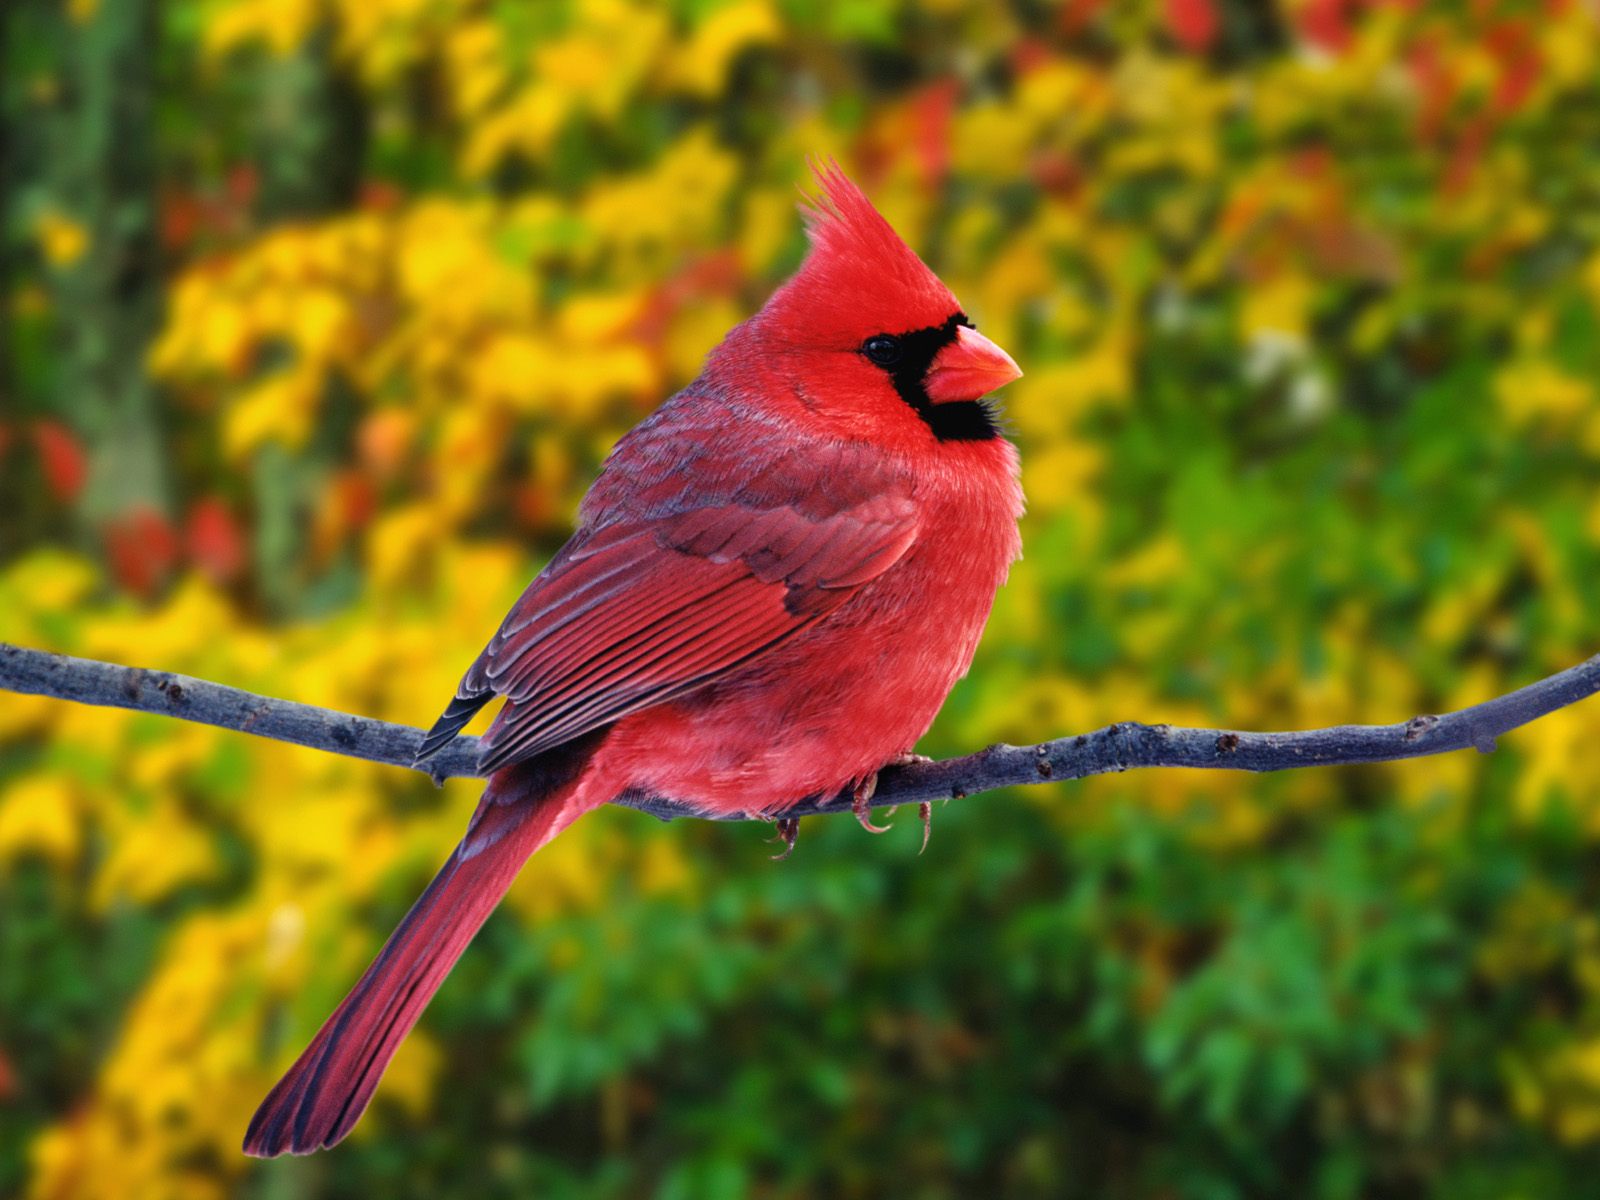 181962 descargar imagen animales, cardenal, ave, aves: fondos de pantalla y protectores de pantalla gratis